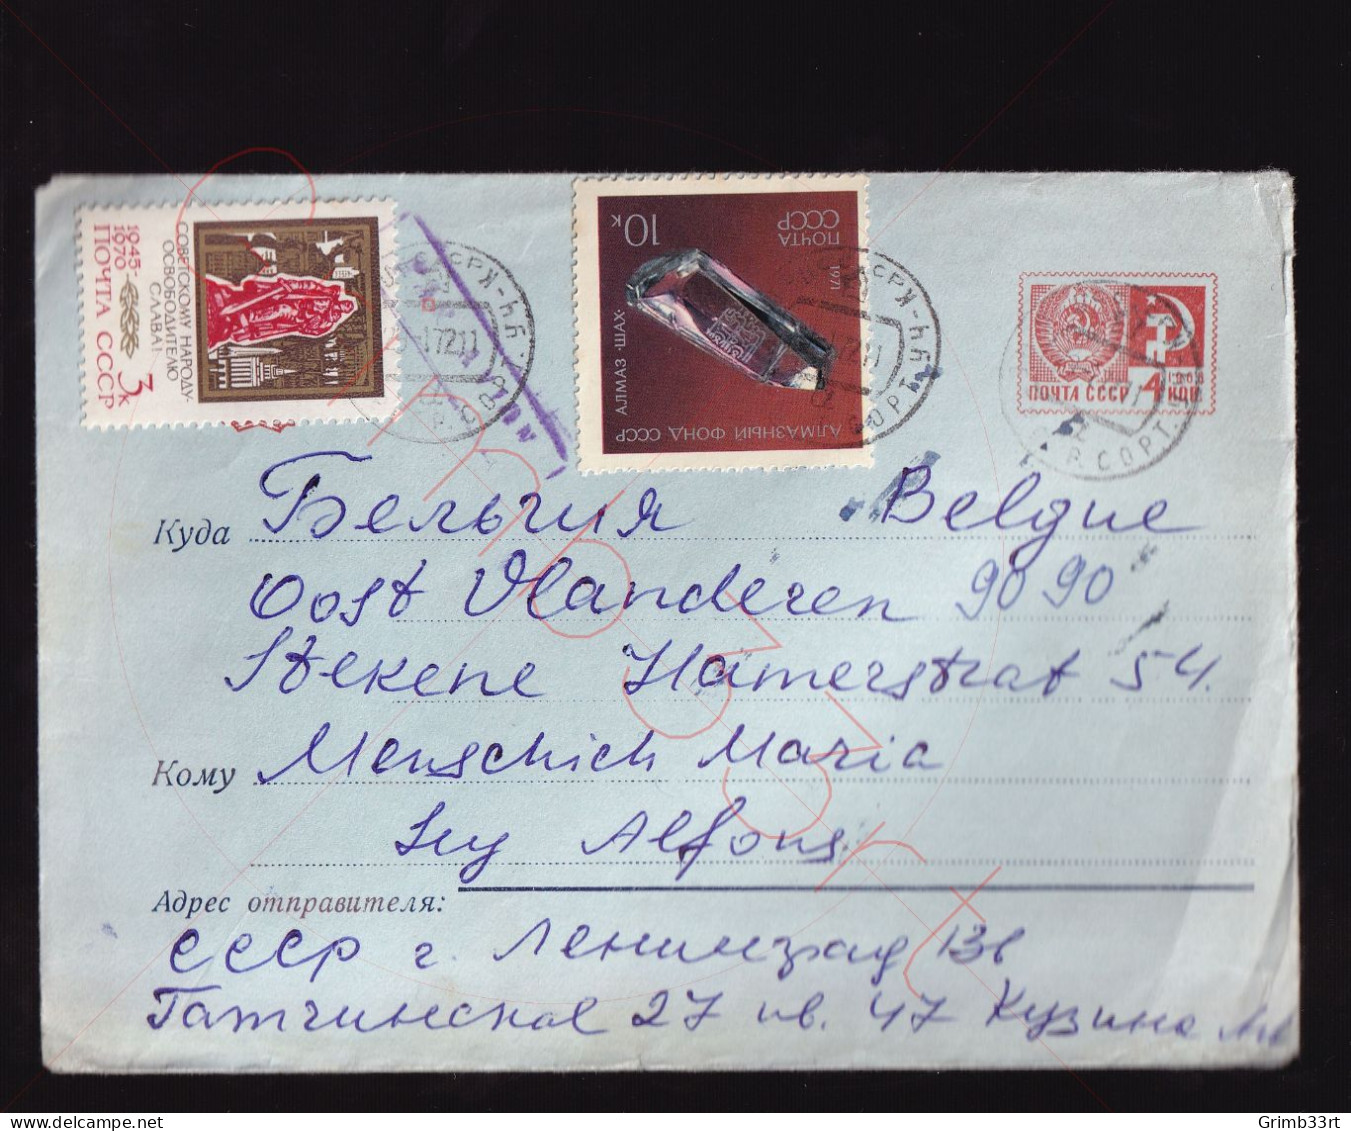 CCCP - Briefomslag Van Luchthaven Rusland Naar Stekene - PAR AVION - 23 Januari 1971 - Brieven En Documenten